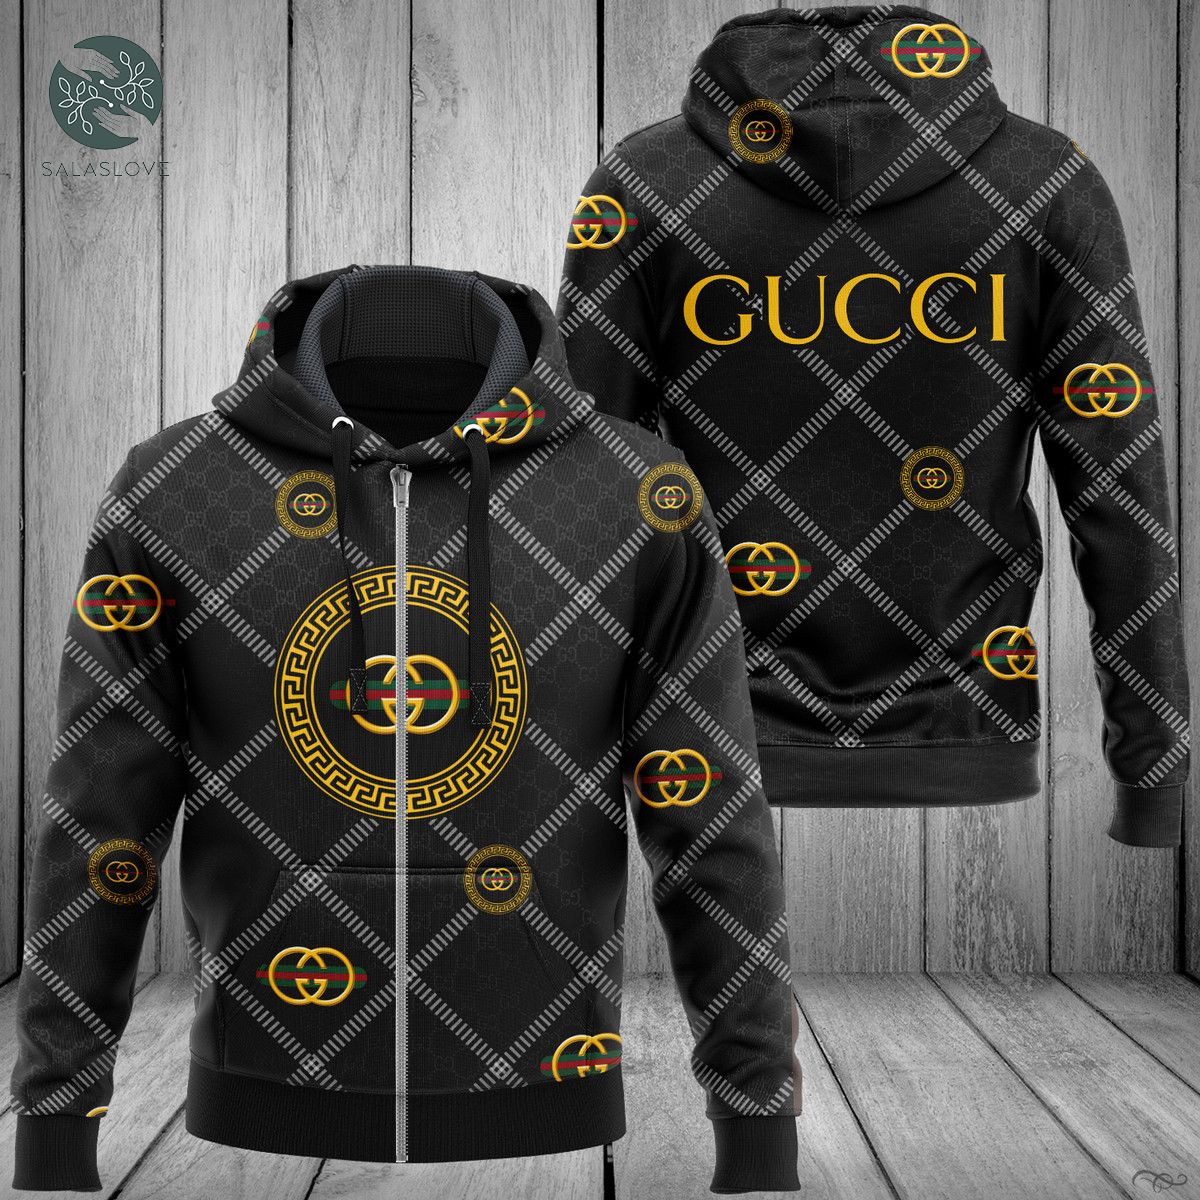 Gucci Premium Adult Hoodie For Men Women